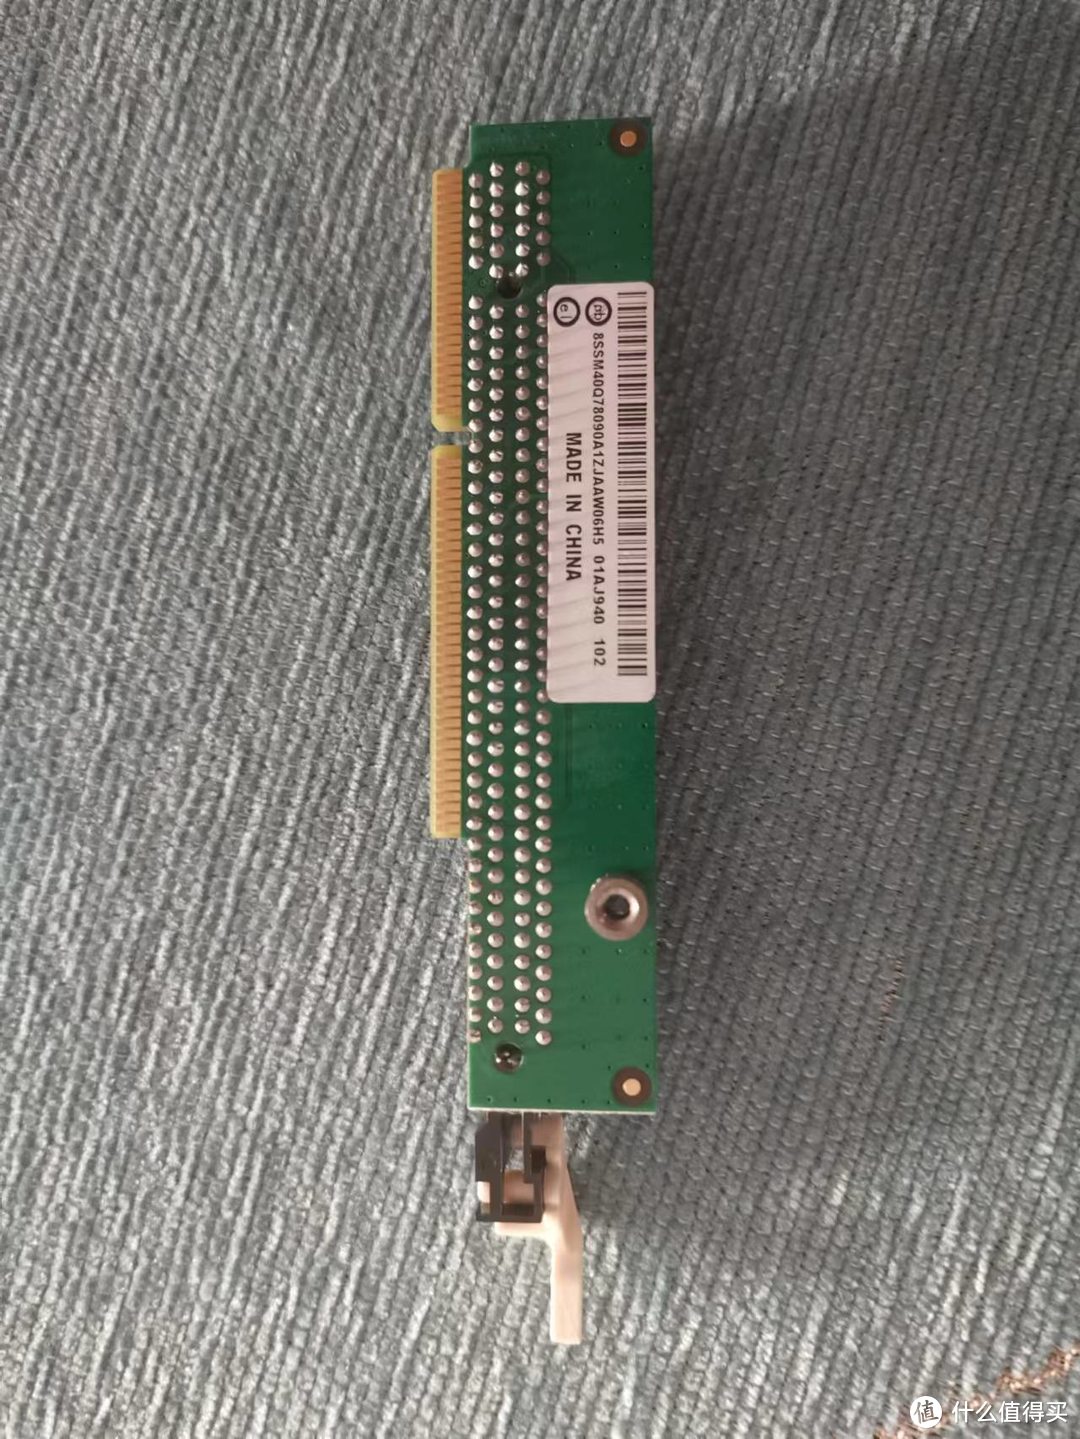 PCIE转接卡，最大速度PCIE 3.0 X8